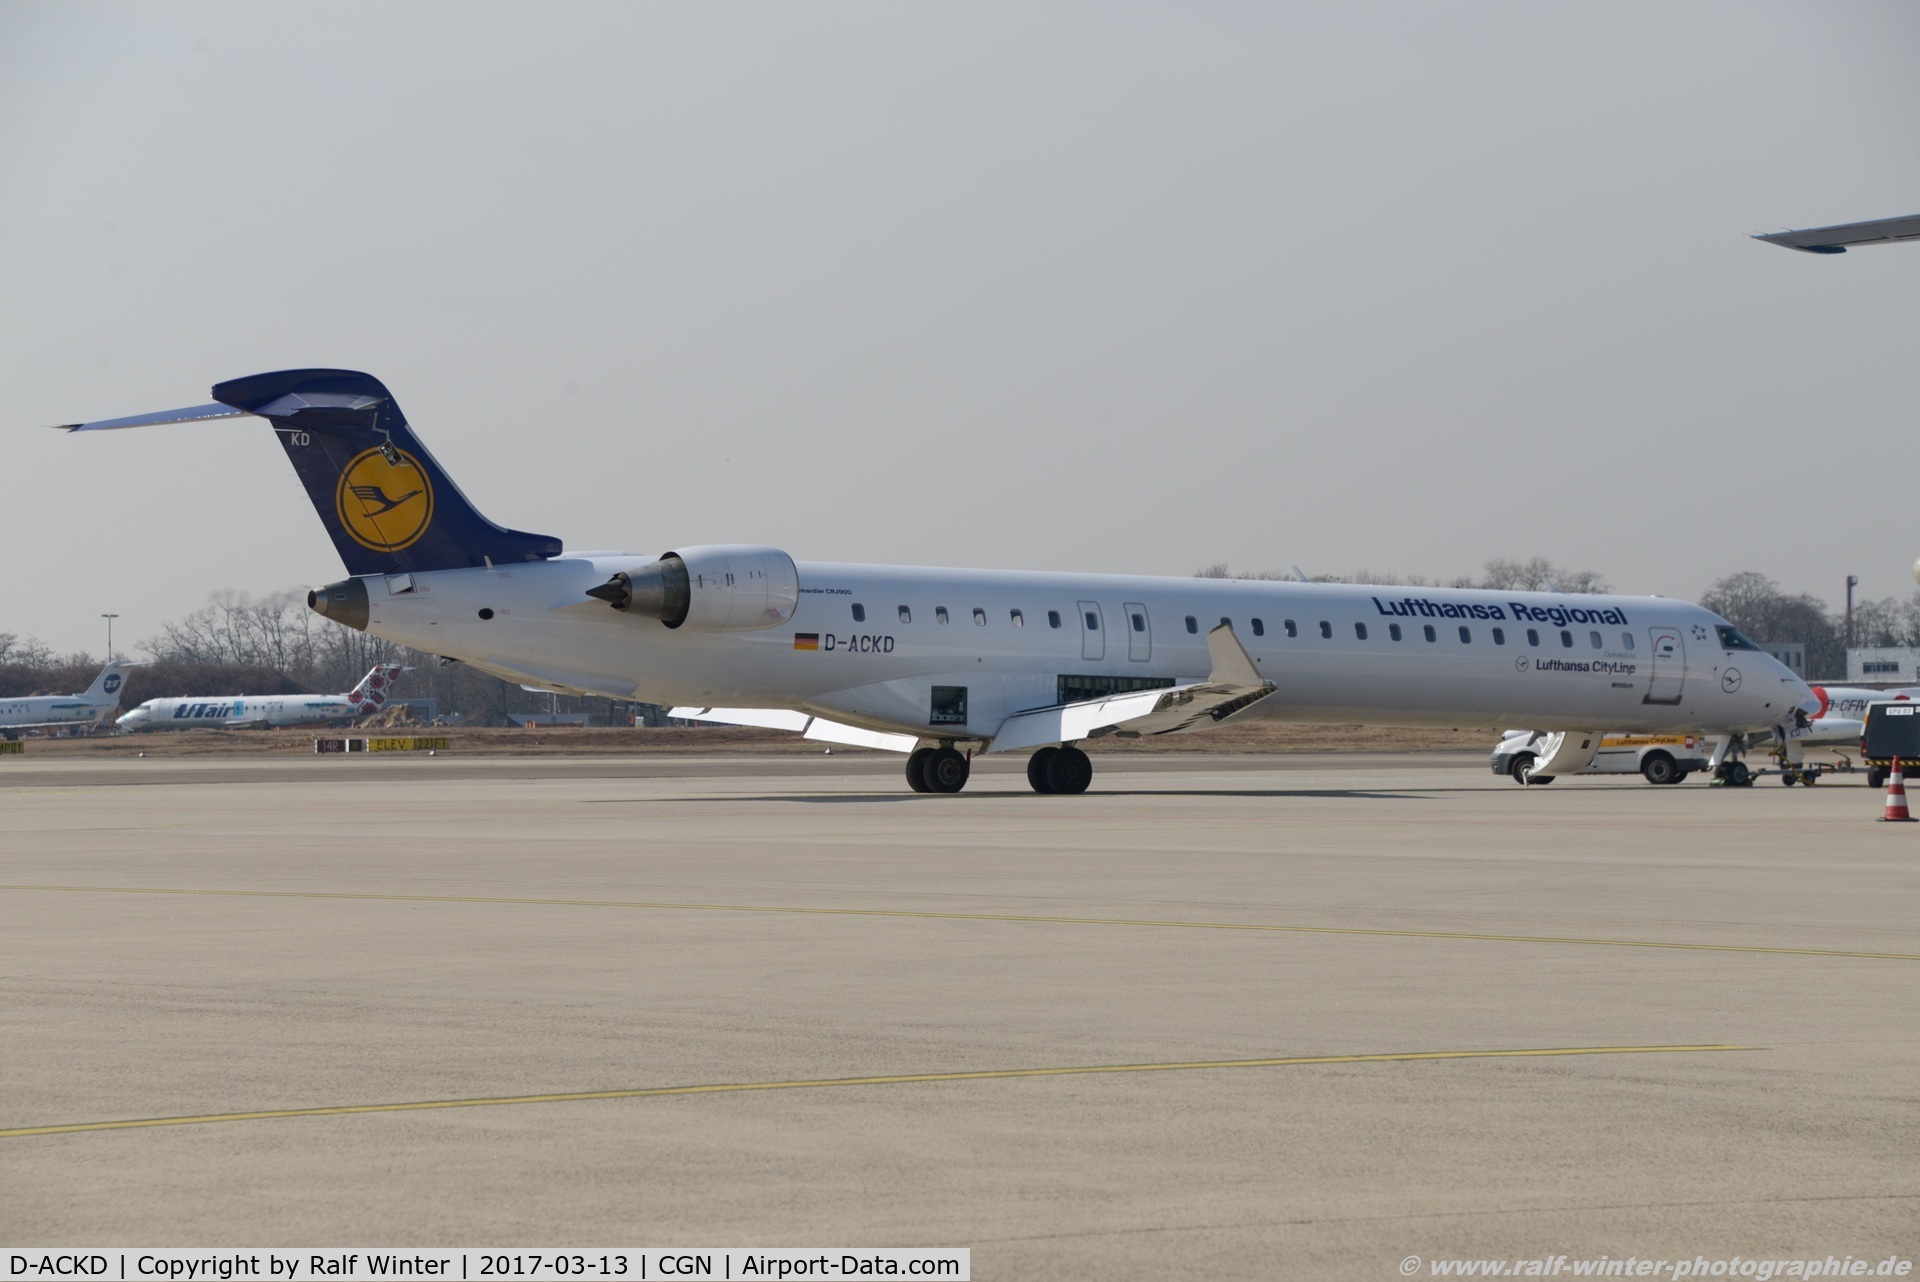 D-ACKD, 2006 Bombardier CRJ-900LR (CL-600-2D24) C/N 15080, Bombardier CL-600-2D24 CRJ-900 - CL CLH Lufthansa CityLine 'Lufthansa Regional' 'Wittlich- 15080 - D-ACKD - 13.03.2017 - CGN